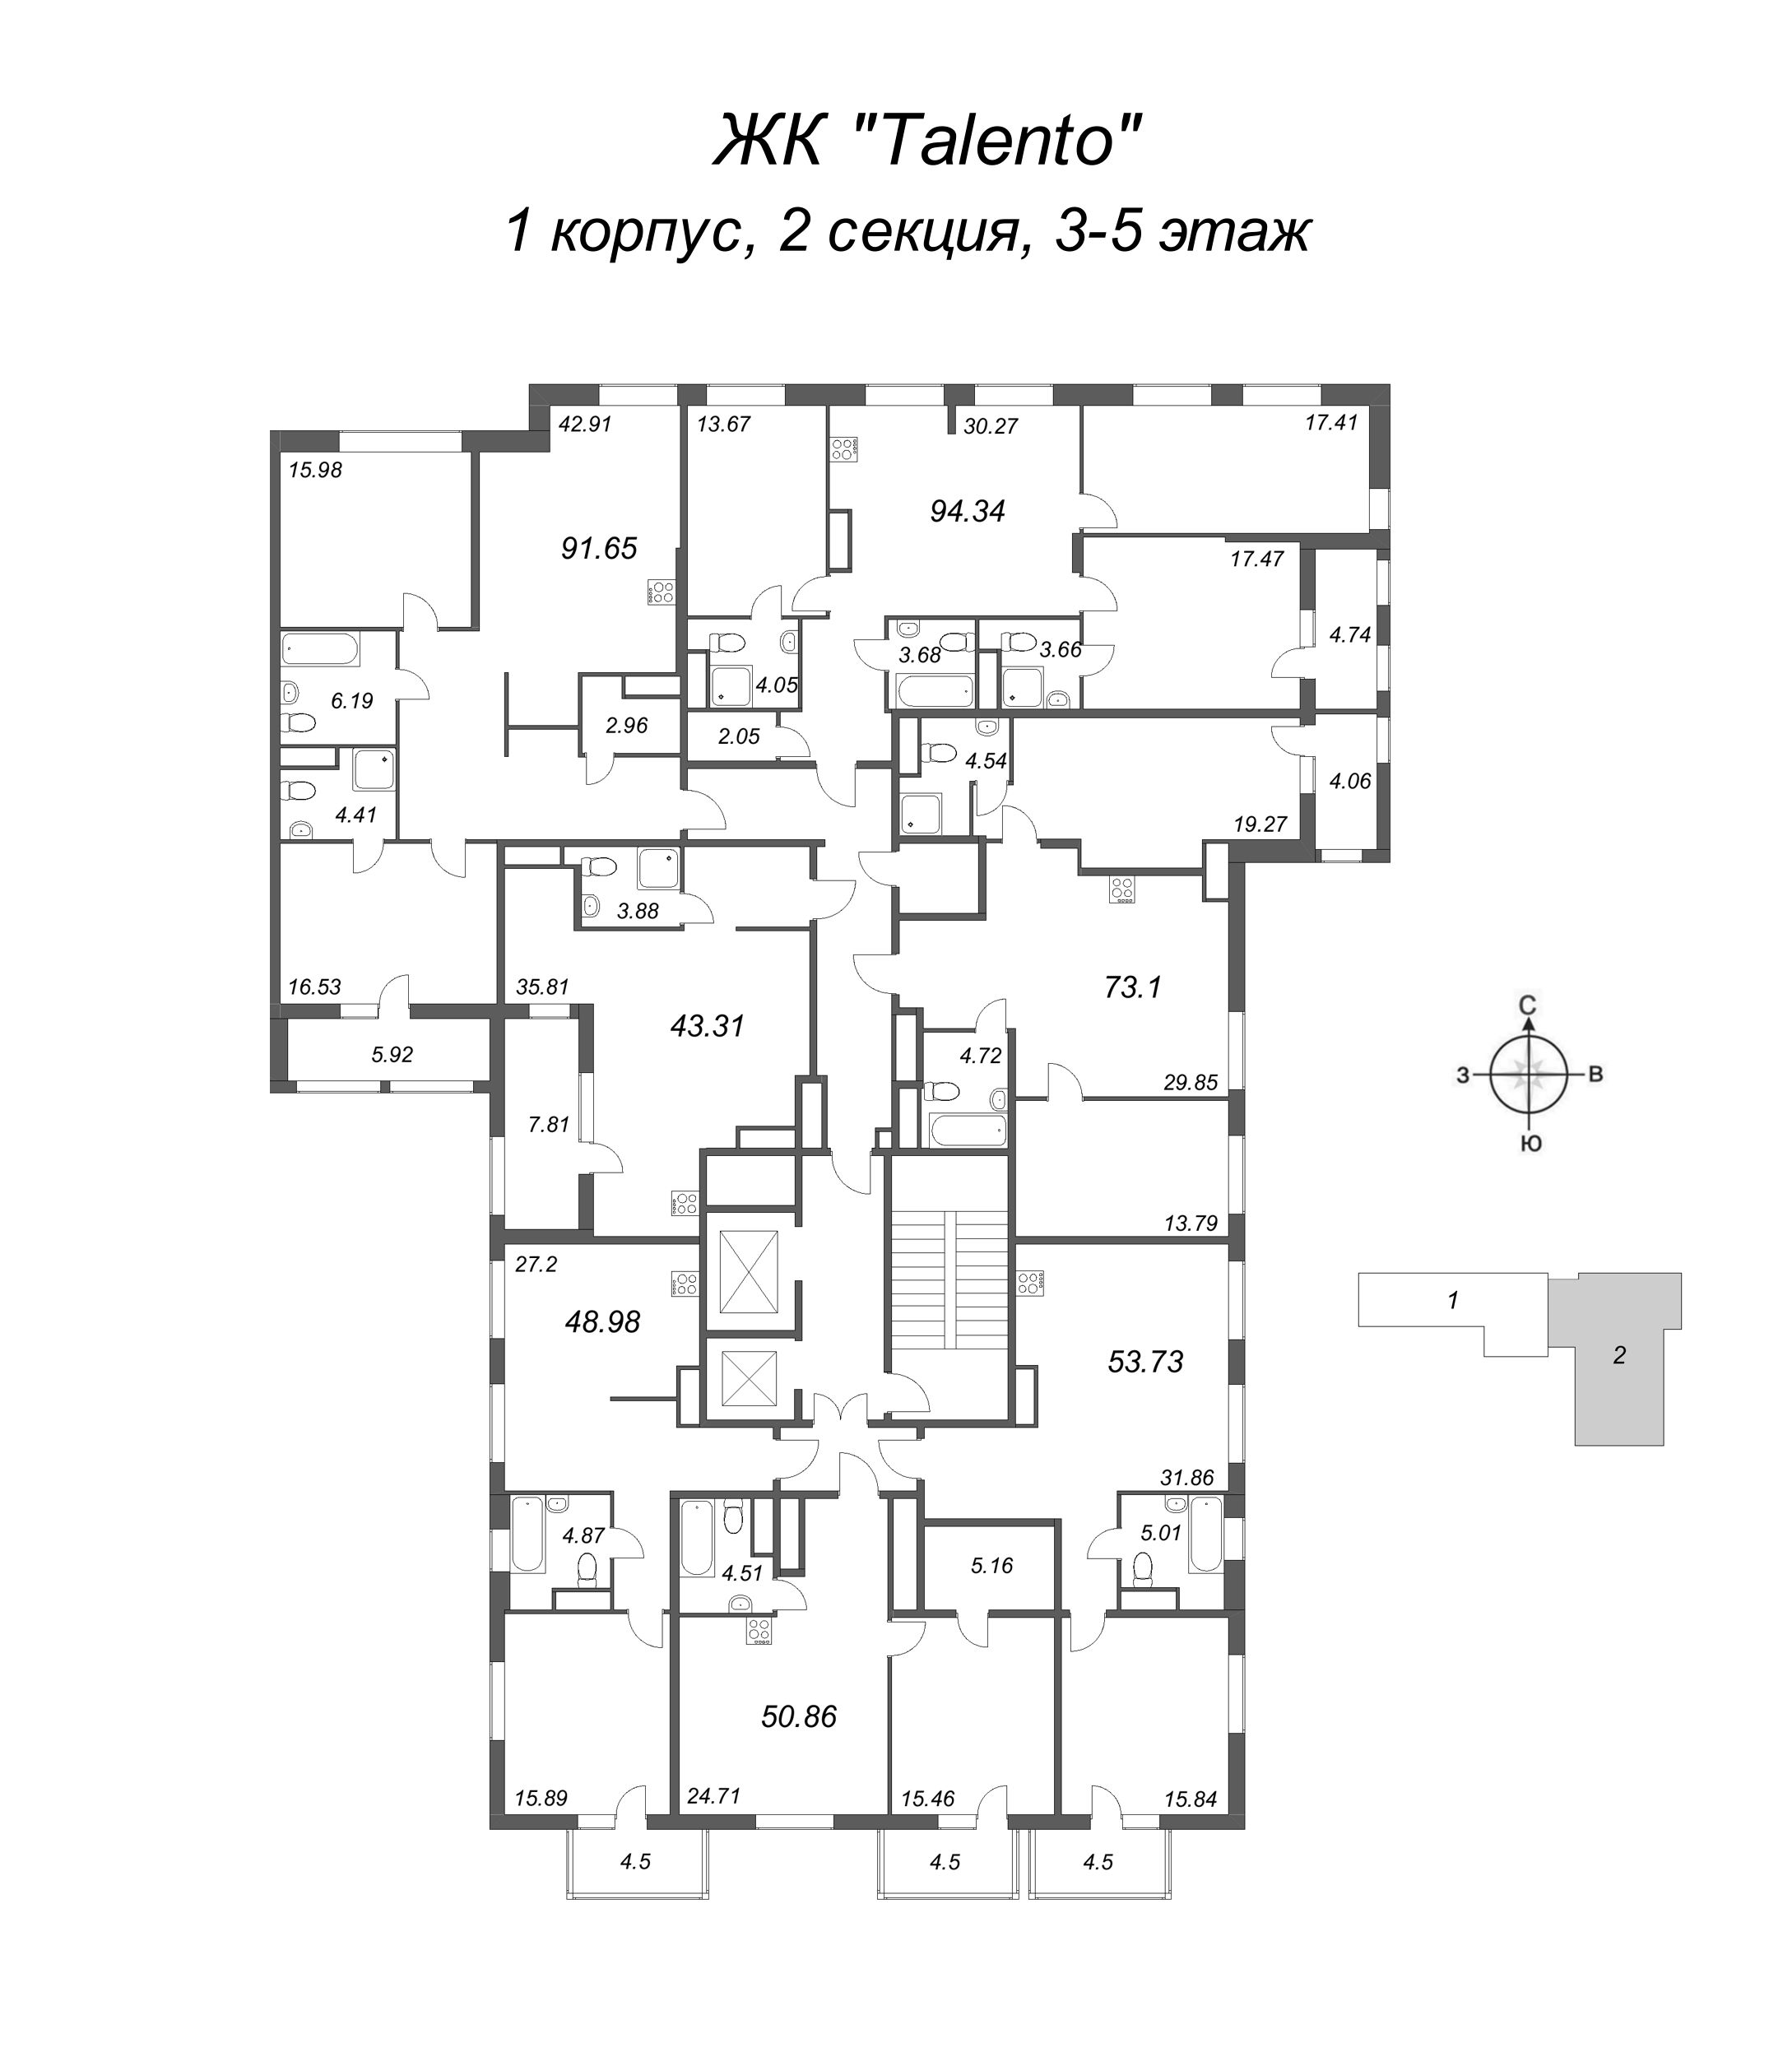 4-комнатная (Евро) квартира, 94.34 м² - планировка этажа